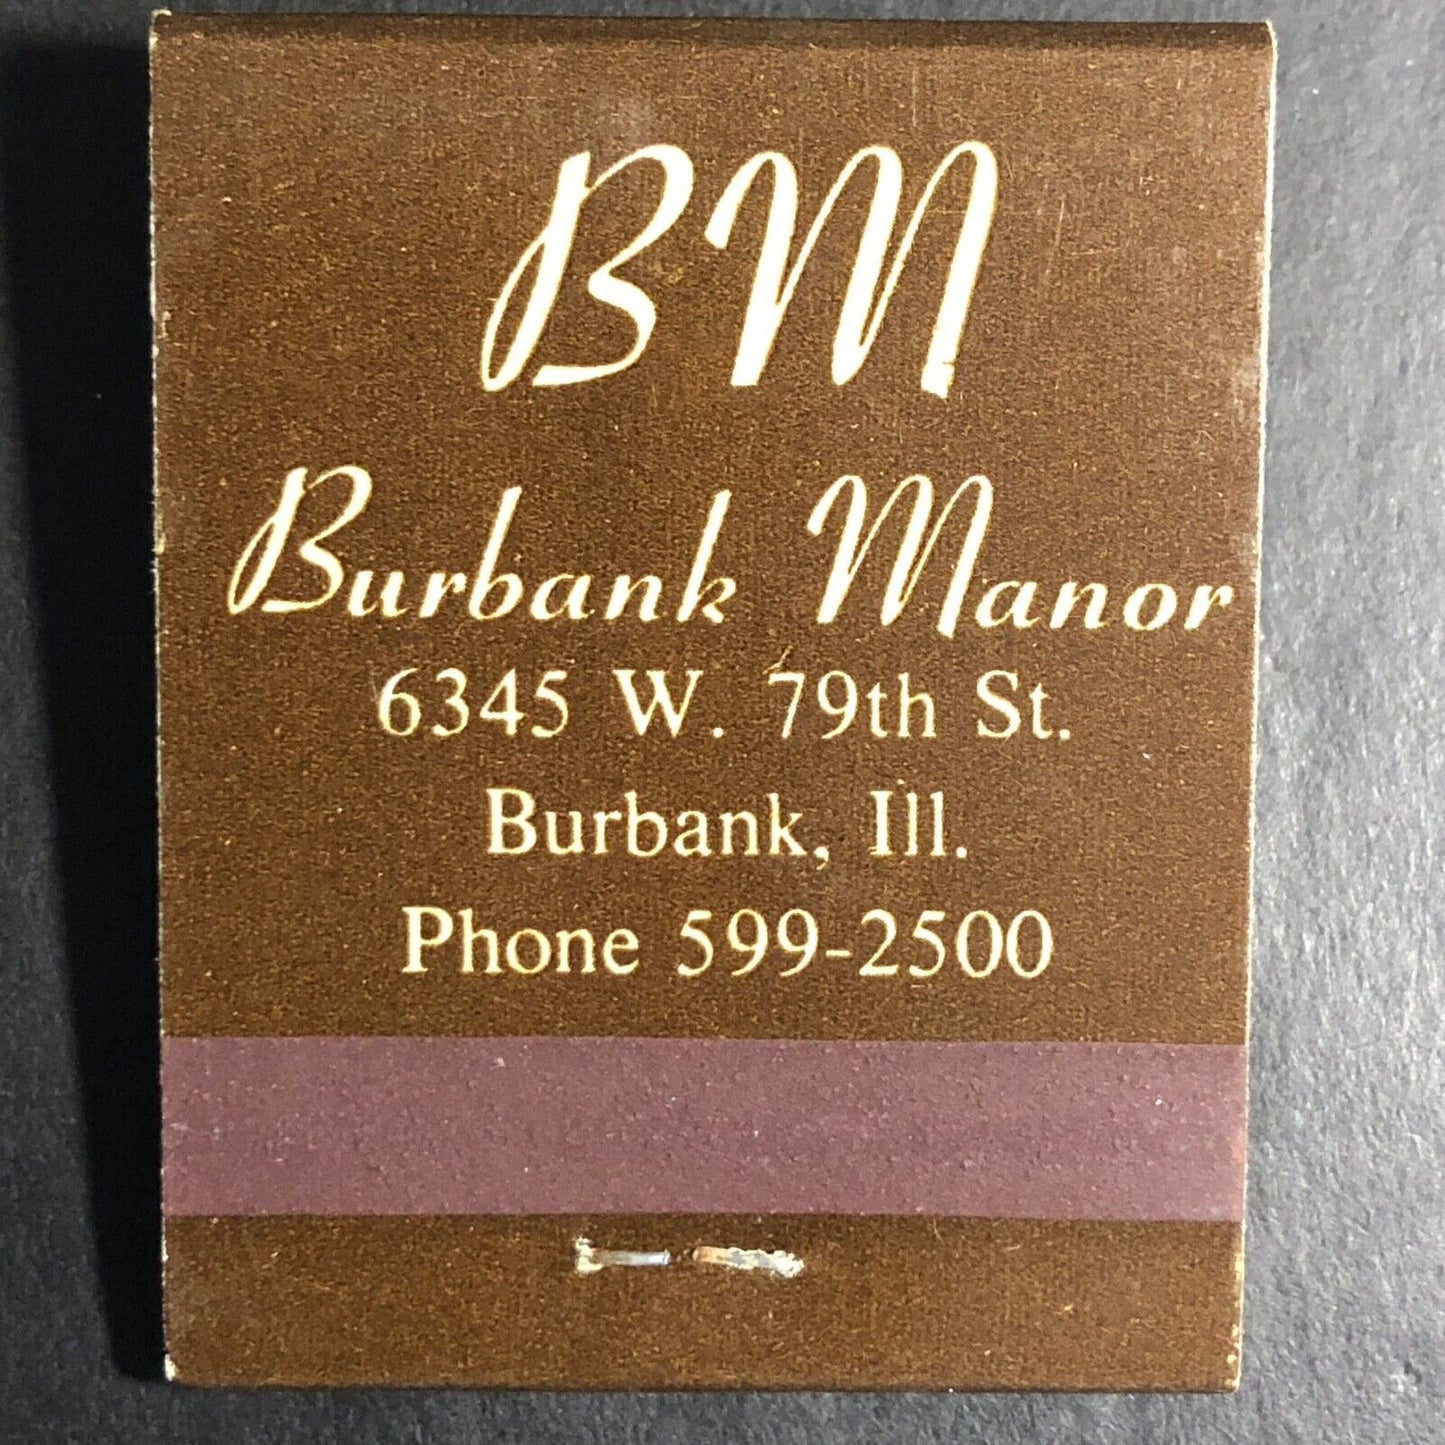 Burbank Manor / Restaurant Illinois Full Matchbook c1974-80's